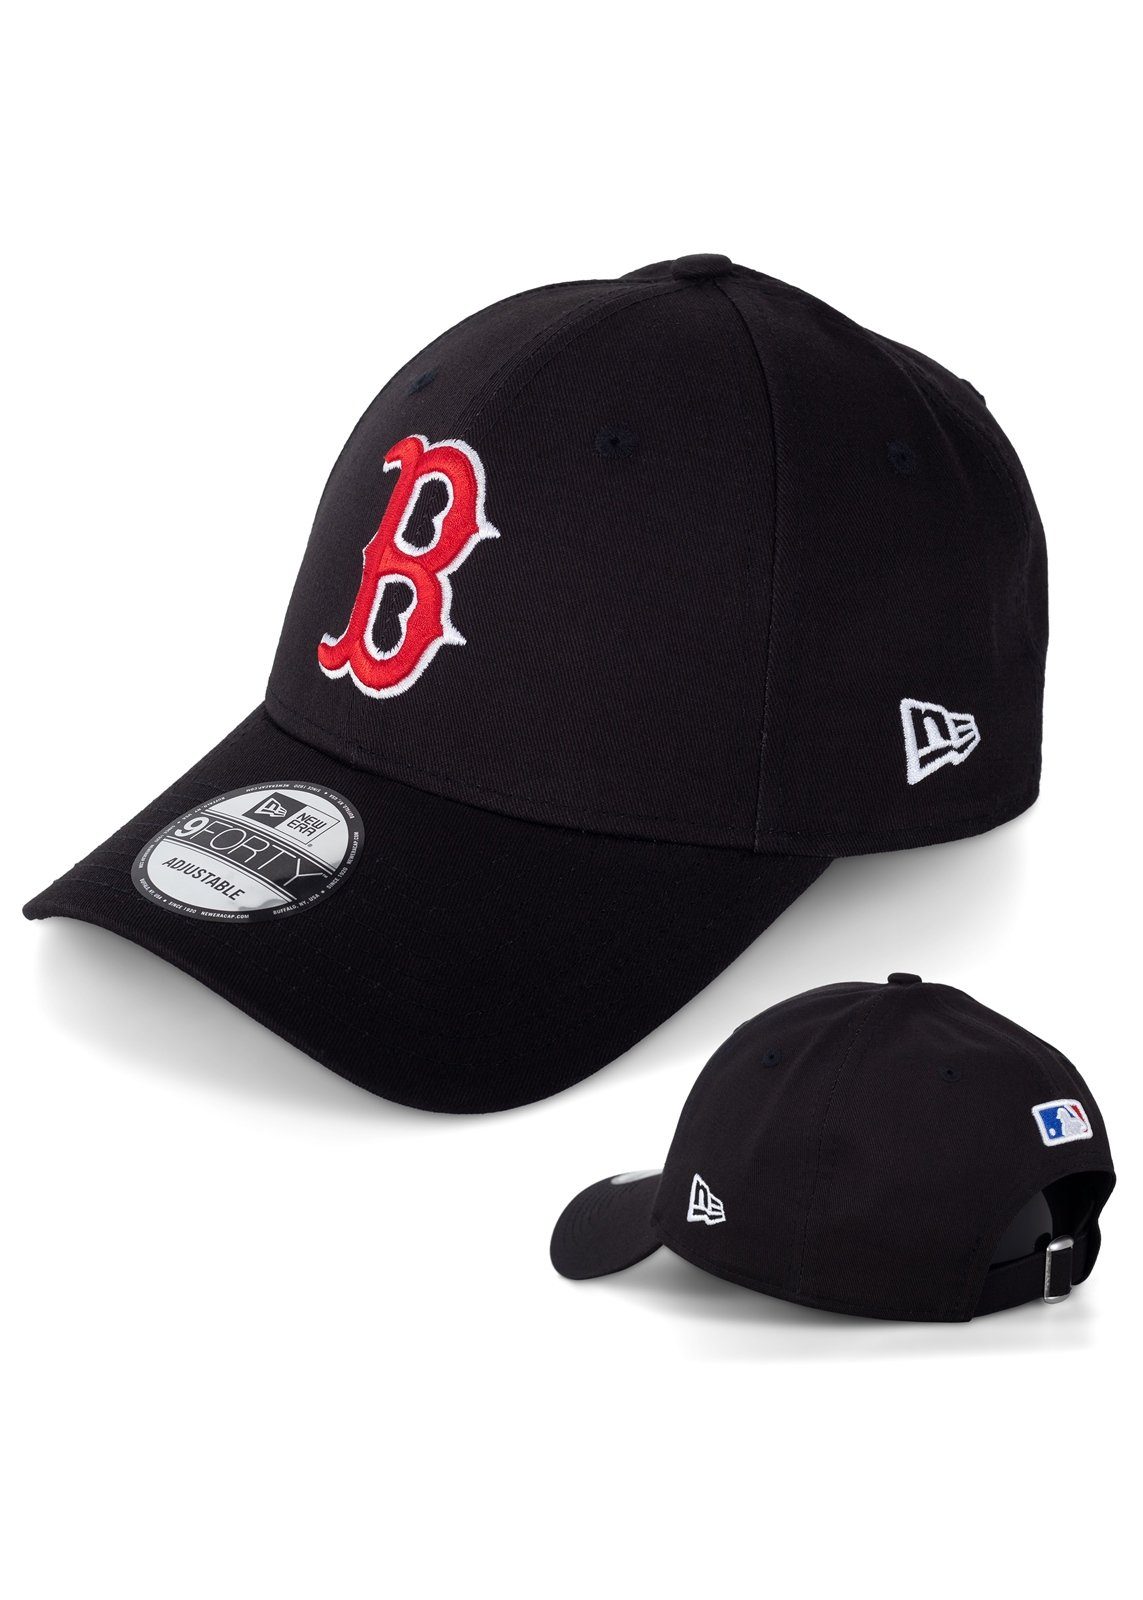 Logo Cap Boston Baseball New Era New Sox Kappe Cap Red schwarz 9Forty Era